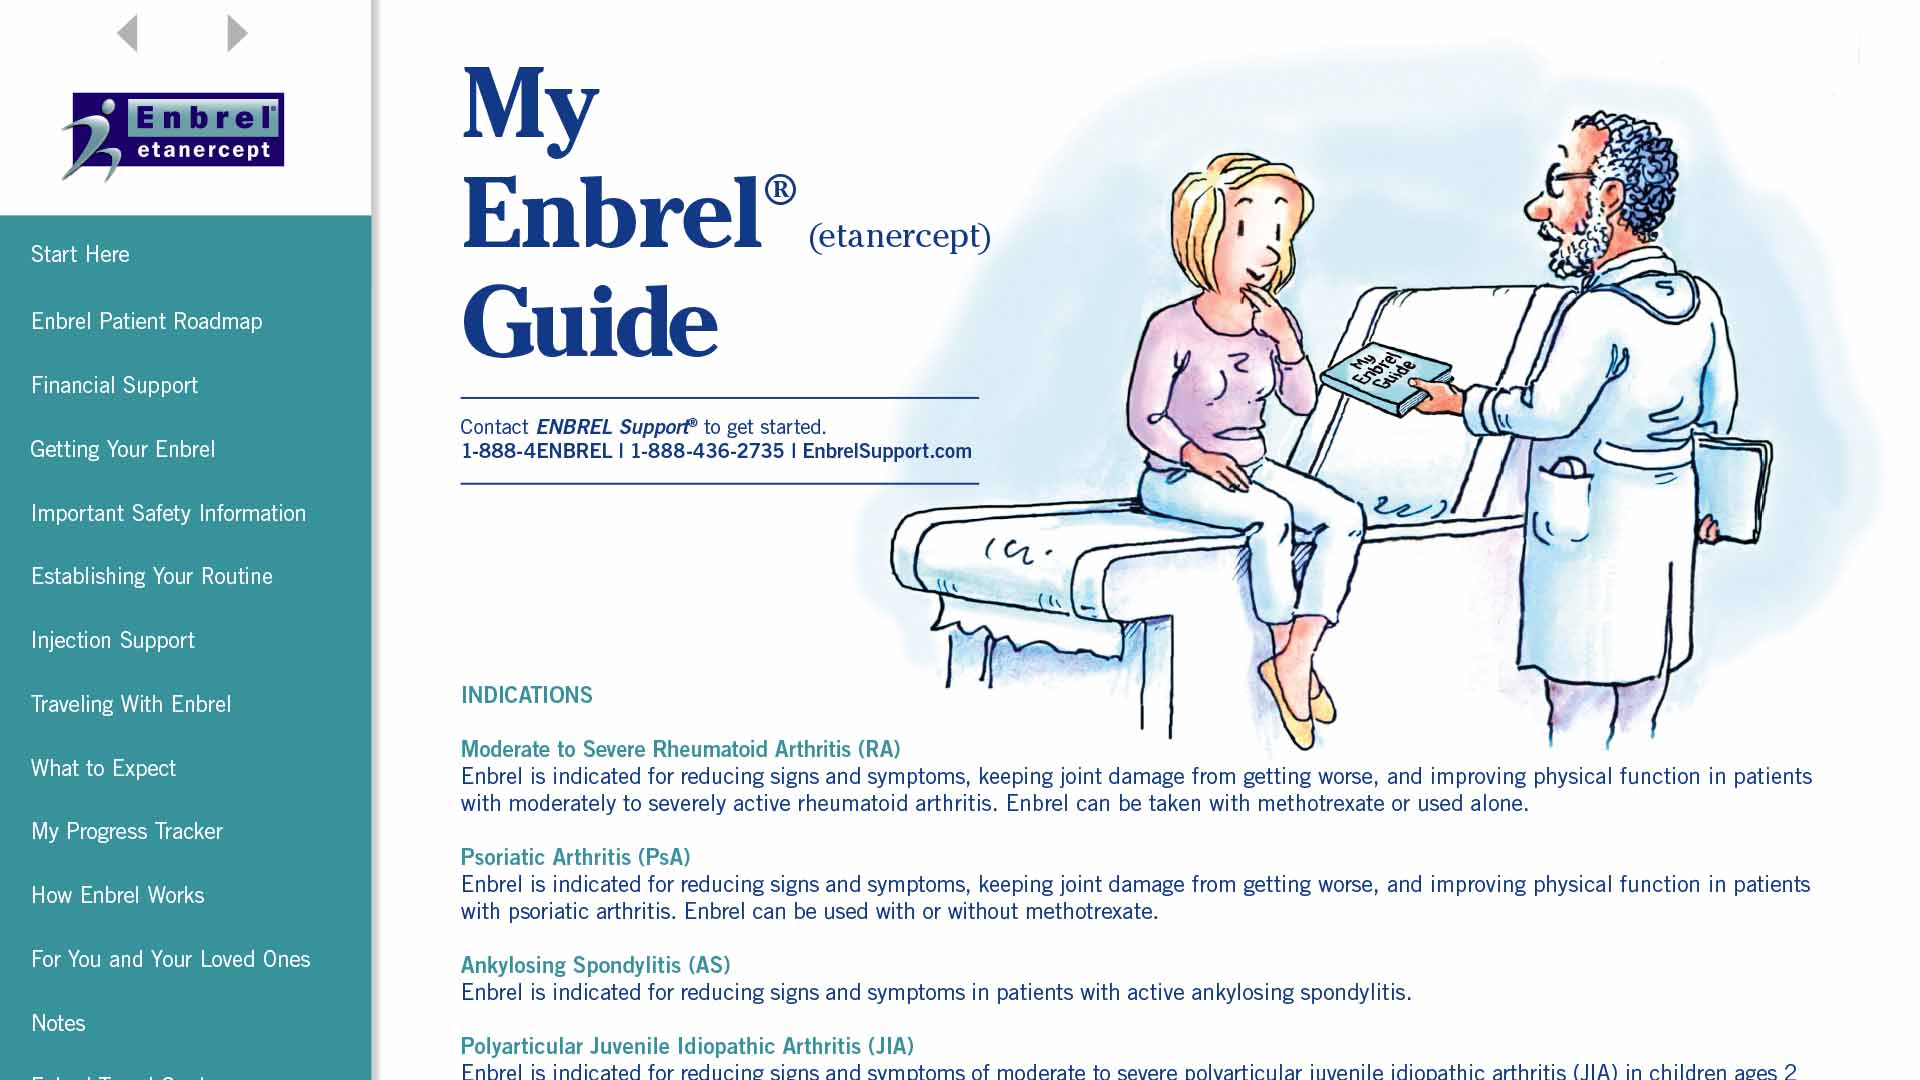 My Enbrel® Guide